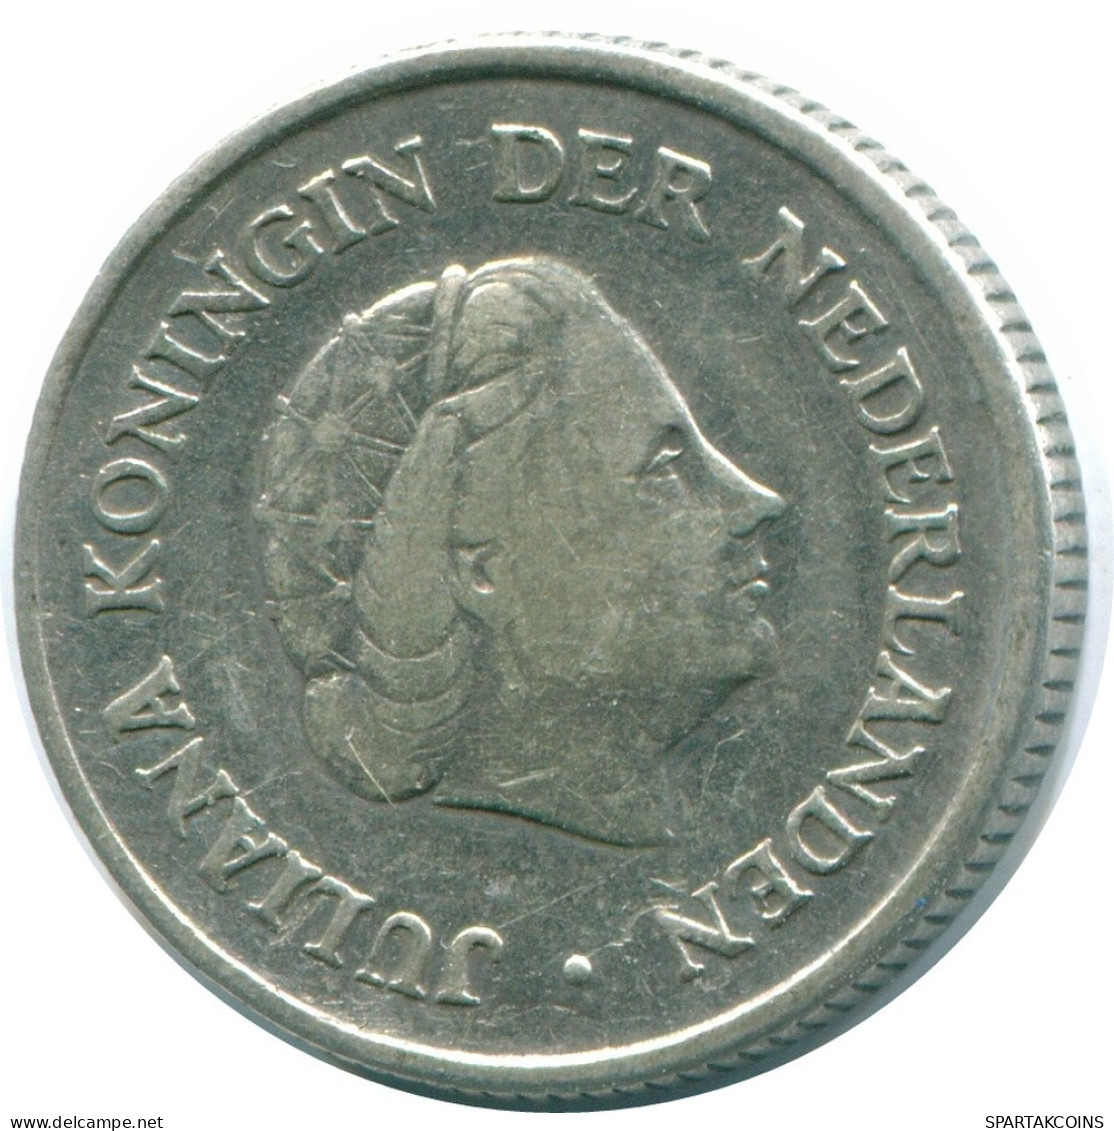 1/4 GULDEN 1962 NIEDERLÄNDISCHE ANTILLEN SILBER Koloniale Münze #NL11177.4.D.A - Netherlands Antilles